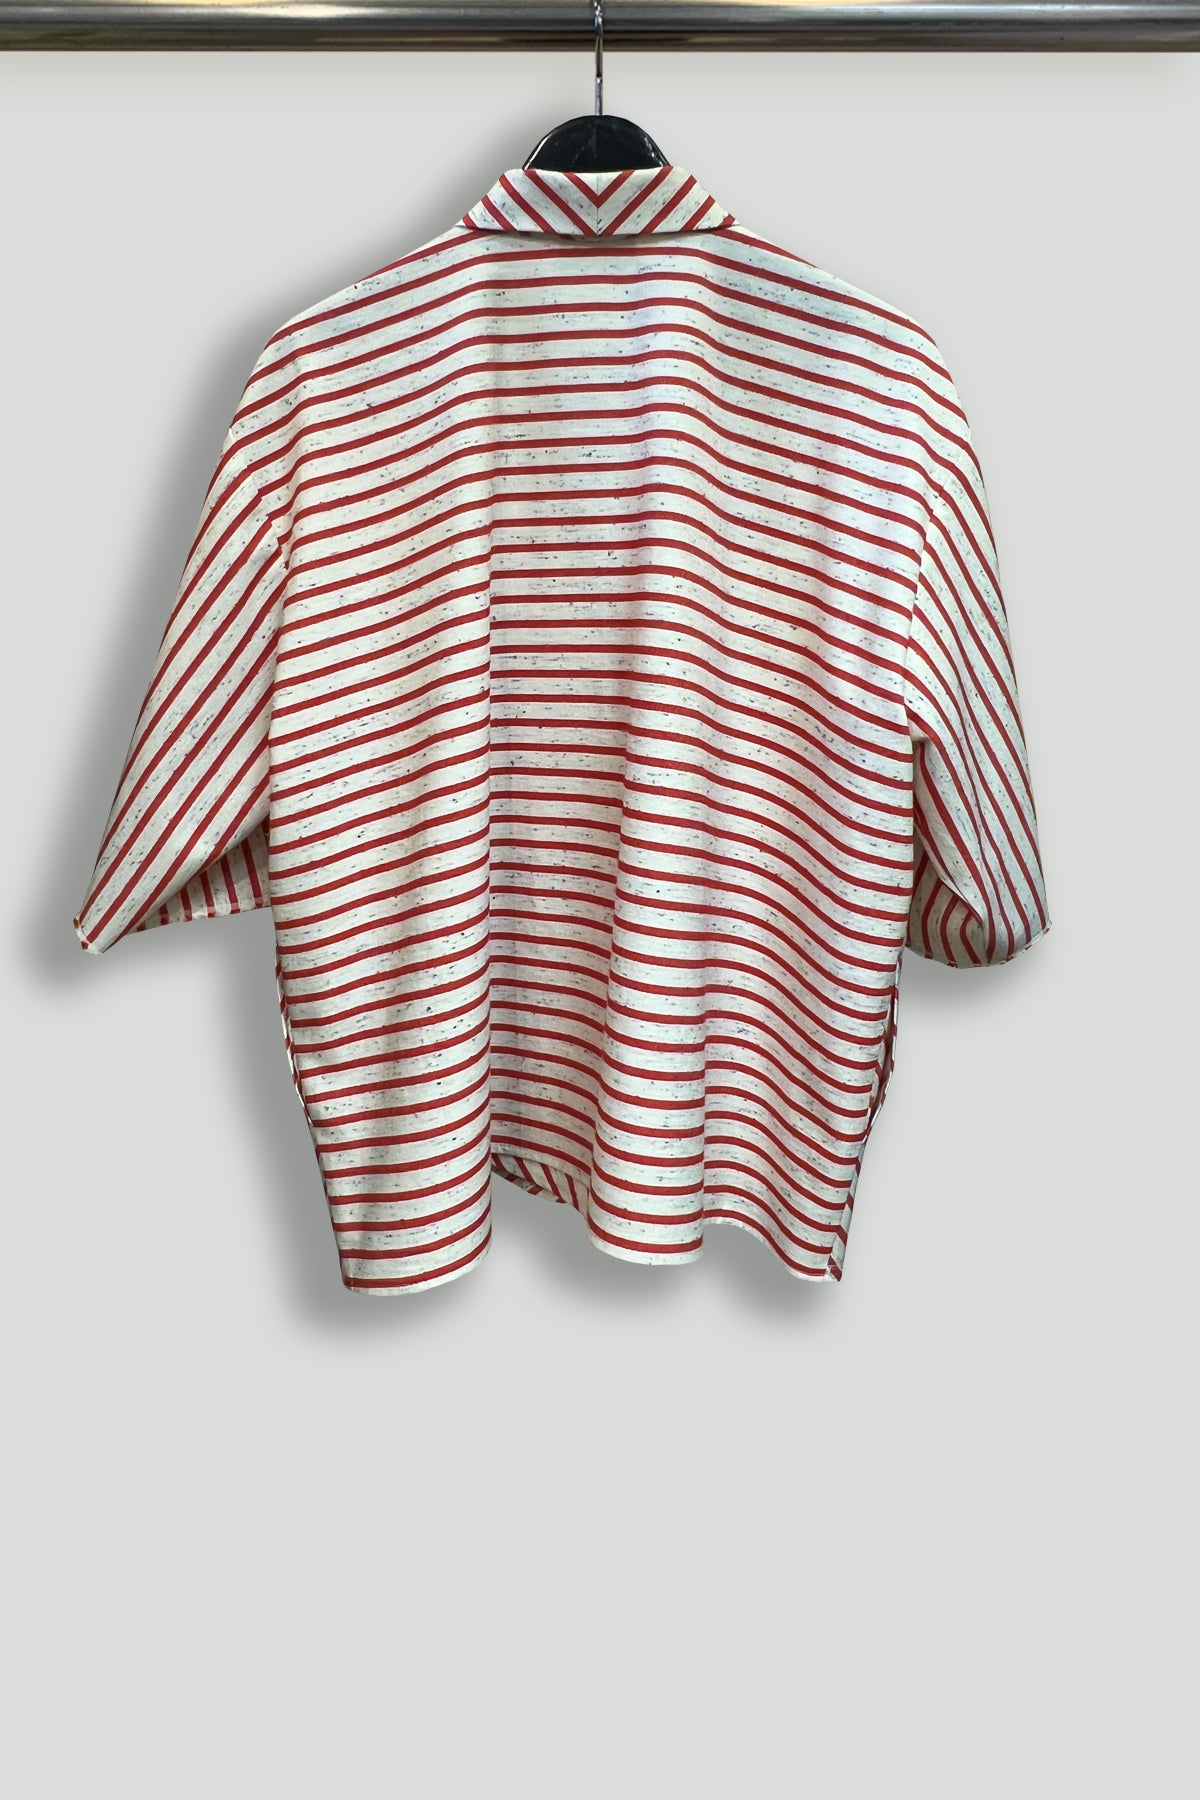 Cotton Awning Stripes Crop Big Shirt - Hanger Back